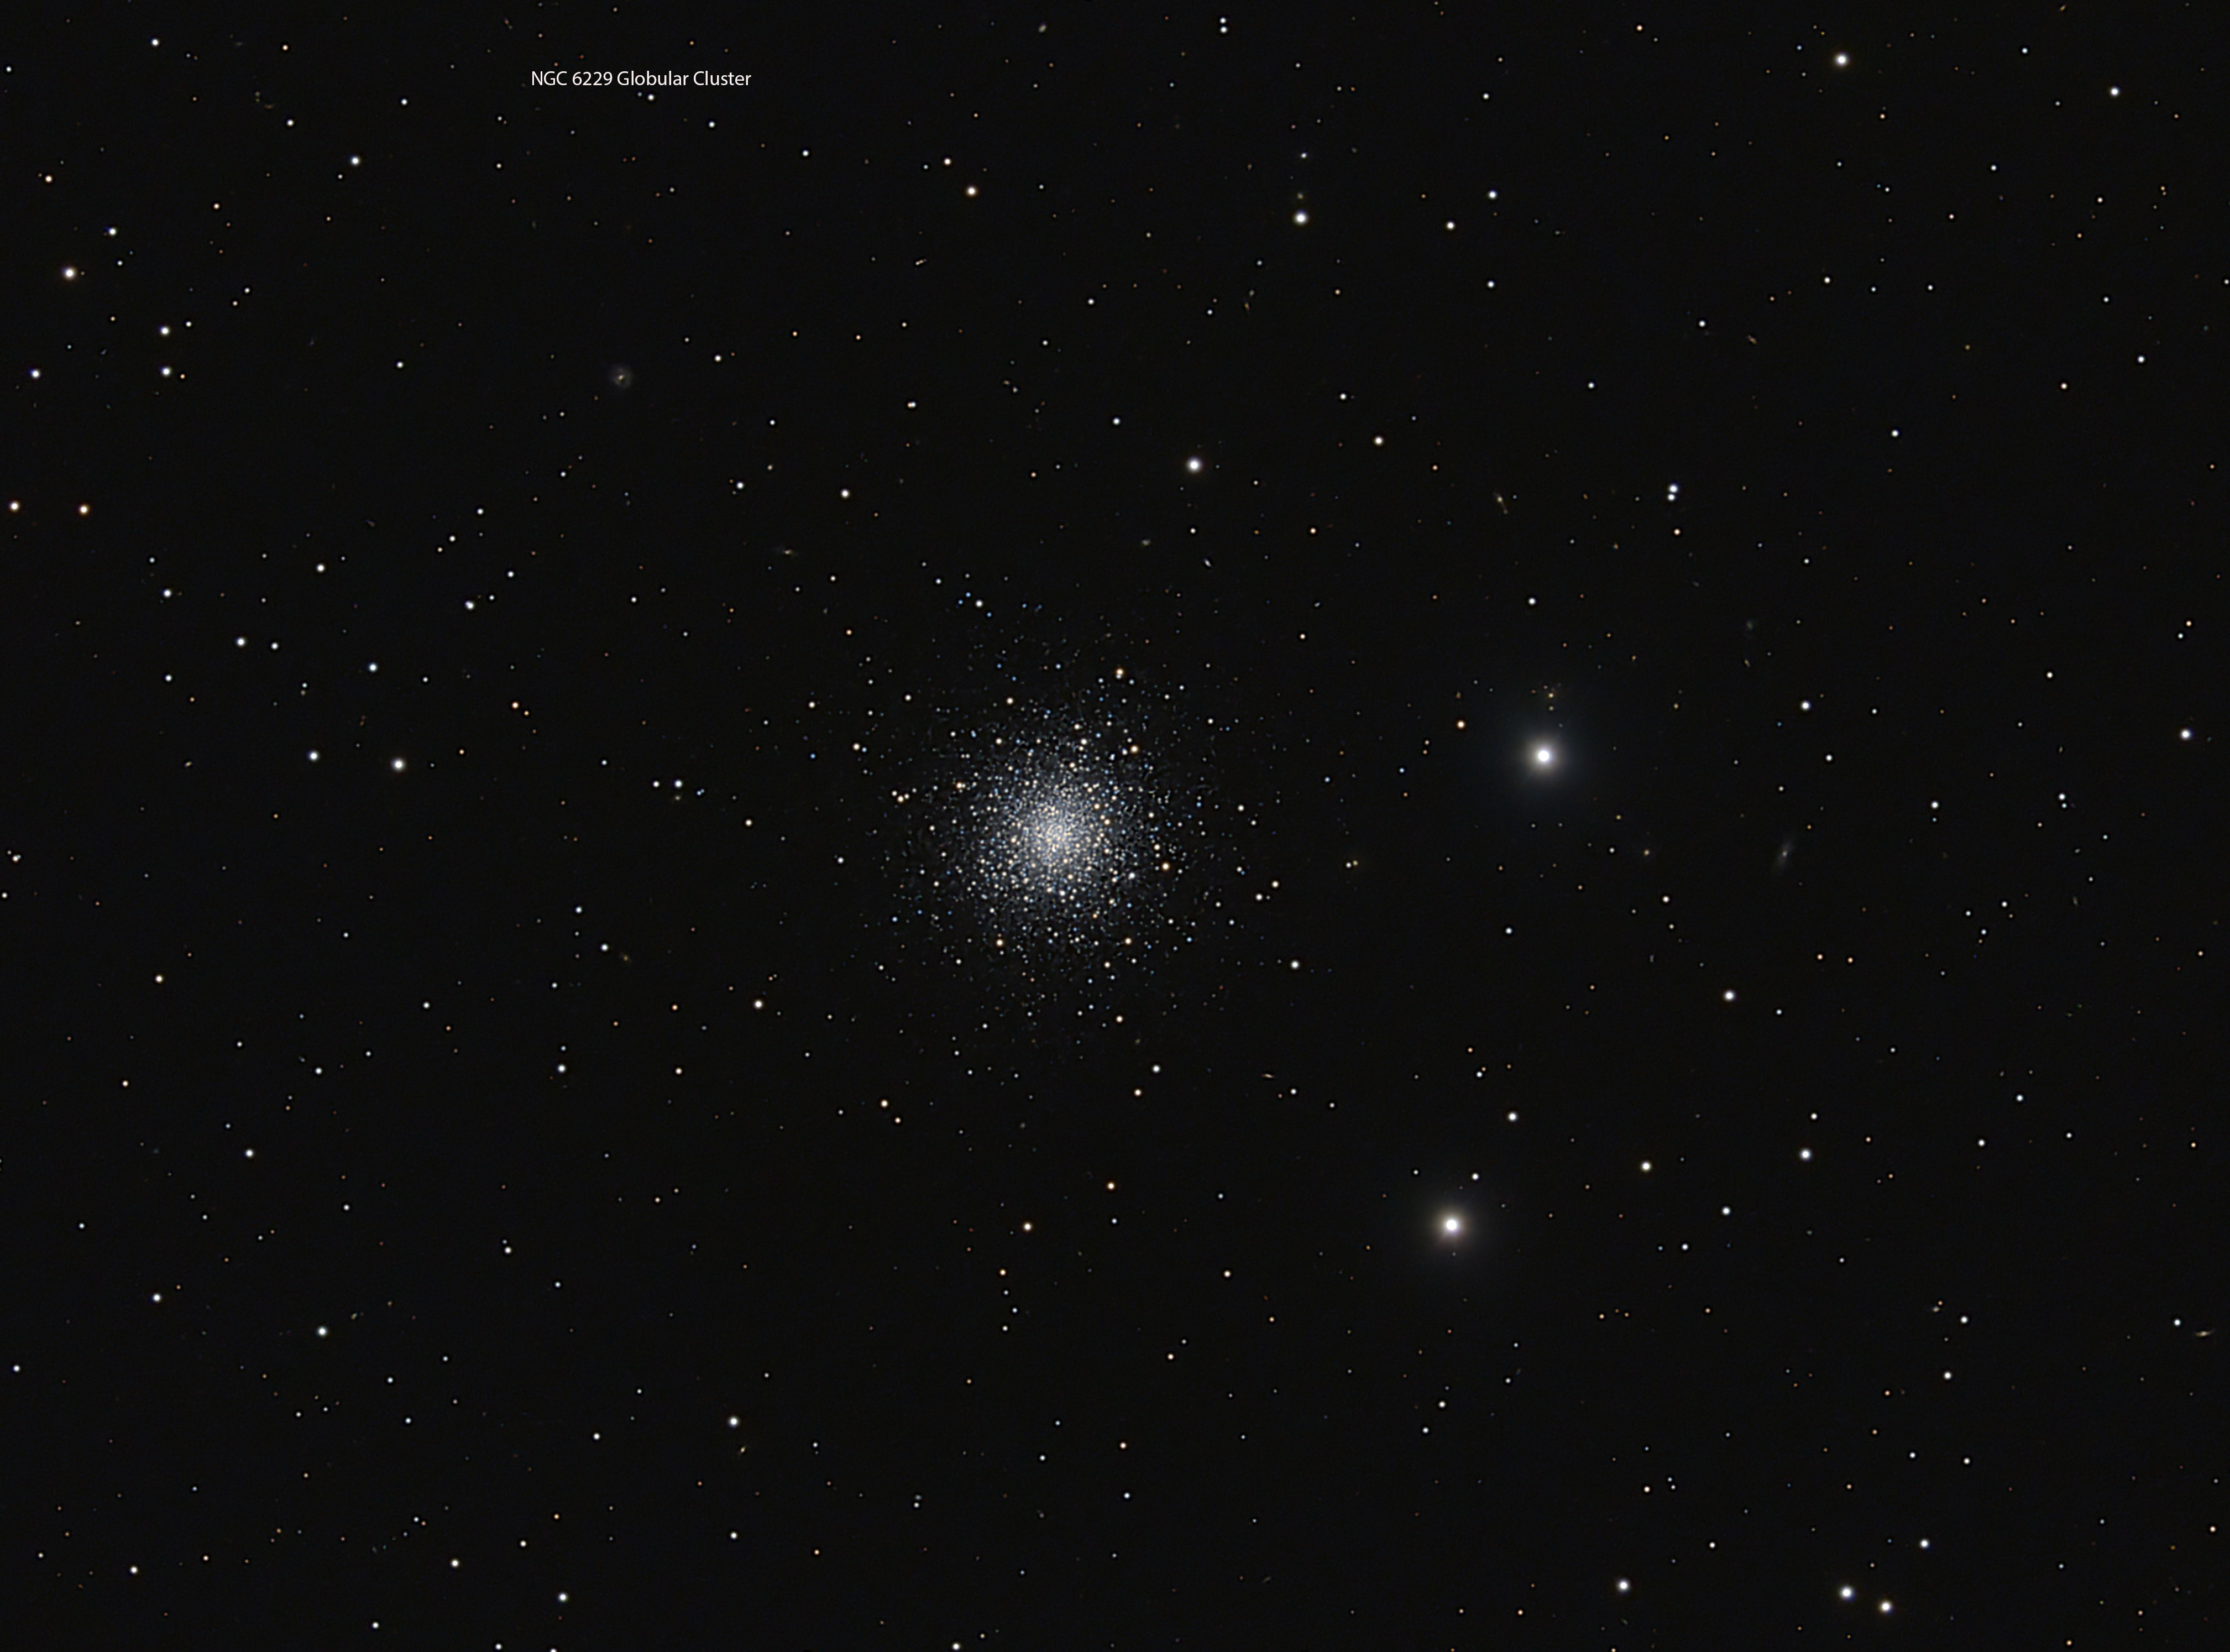 NGC6229.jpg